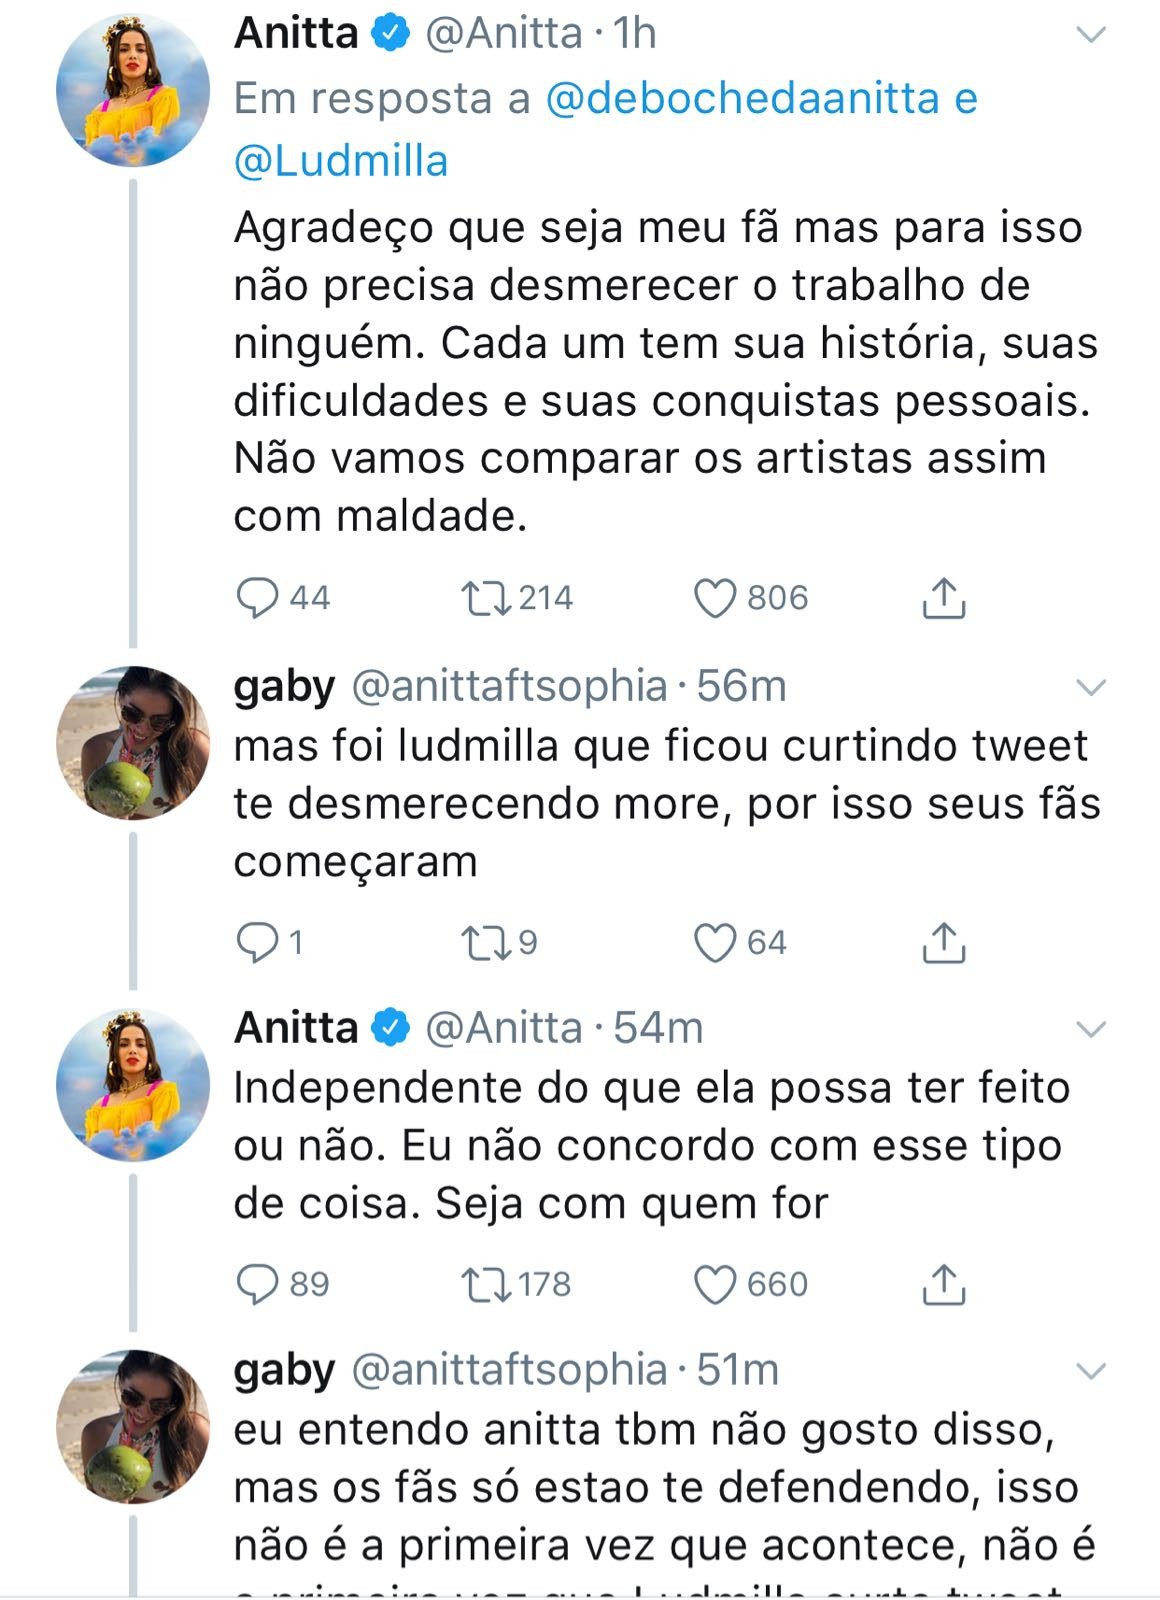 Anitta defende Ludmilla no Twitter (Foto: Reprodução/Twitter)